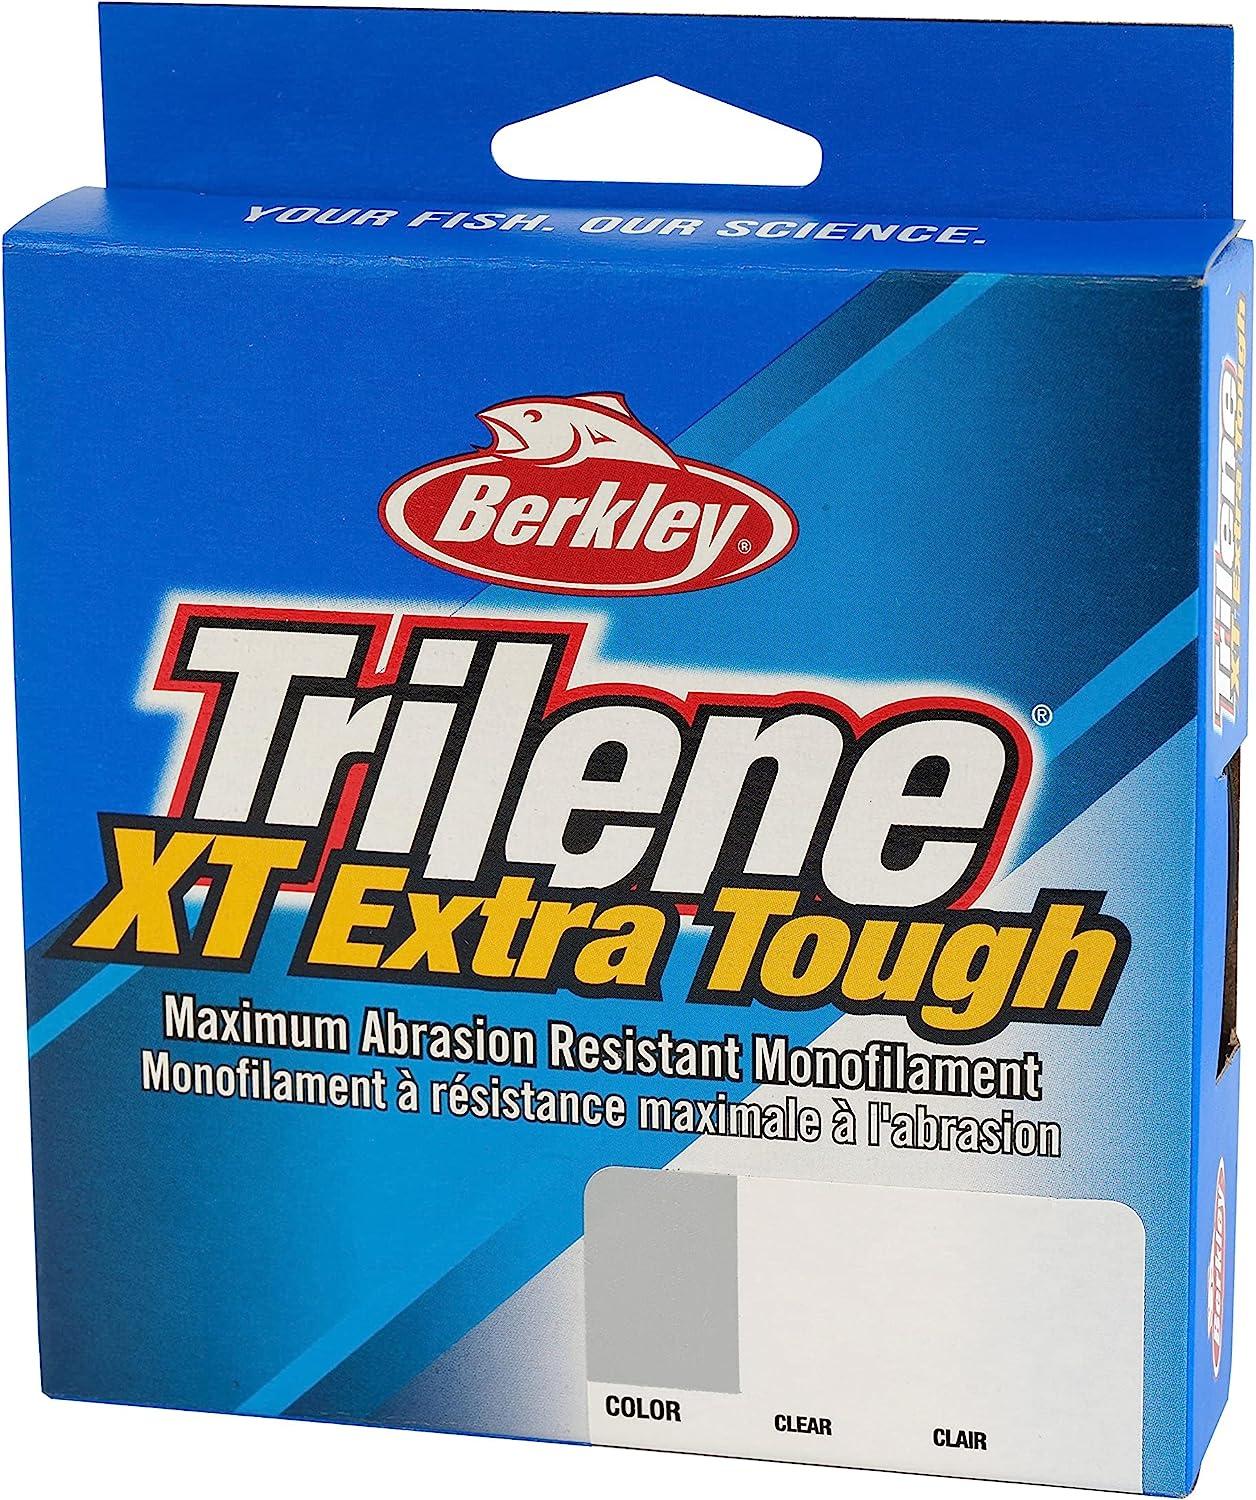 Berkley Trilene XT Monofilament Fishing Line Clear 300-Yard/10-Pound